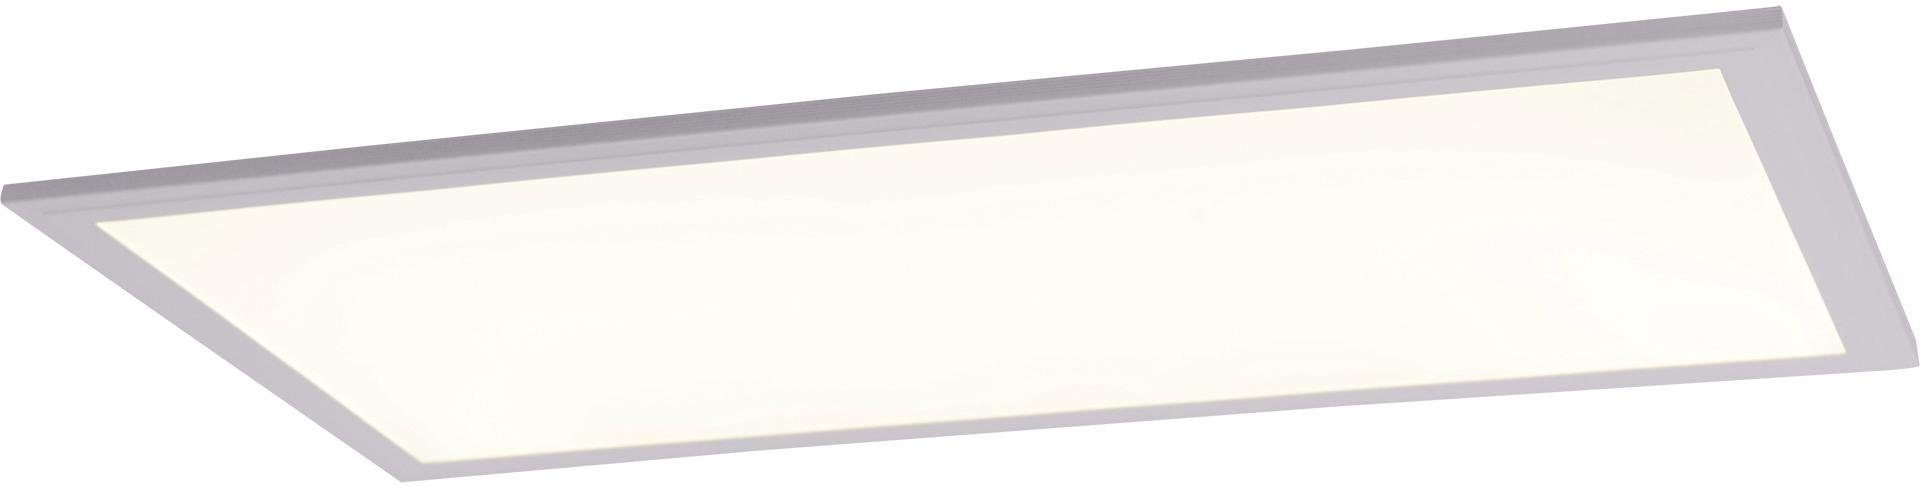 LED Sorriso, total näve 30x60cm 96 LED´s 4000K; integriert, Aufbaupanel LED Deckenleuchte Neutralweiß, inkl. 1600lm "Sorriso", 18W fest